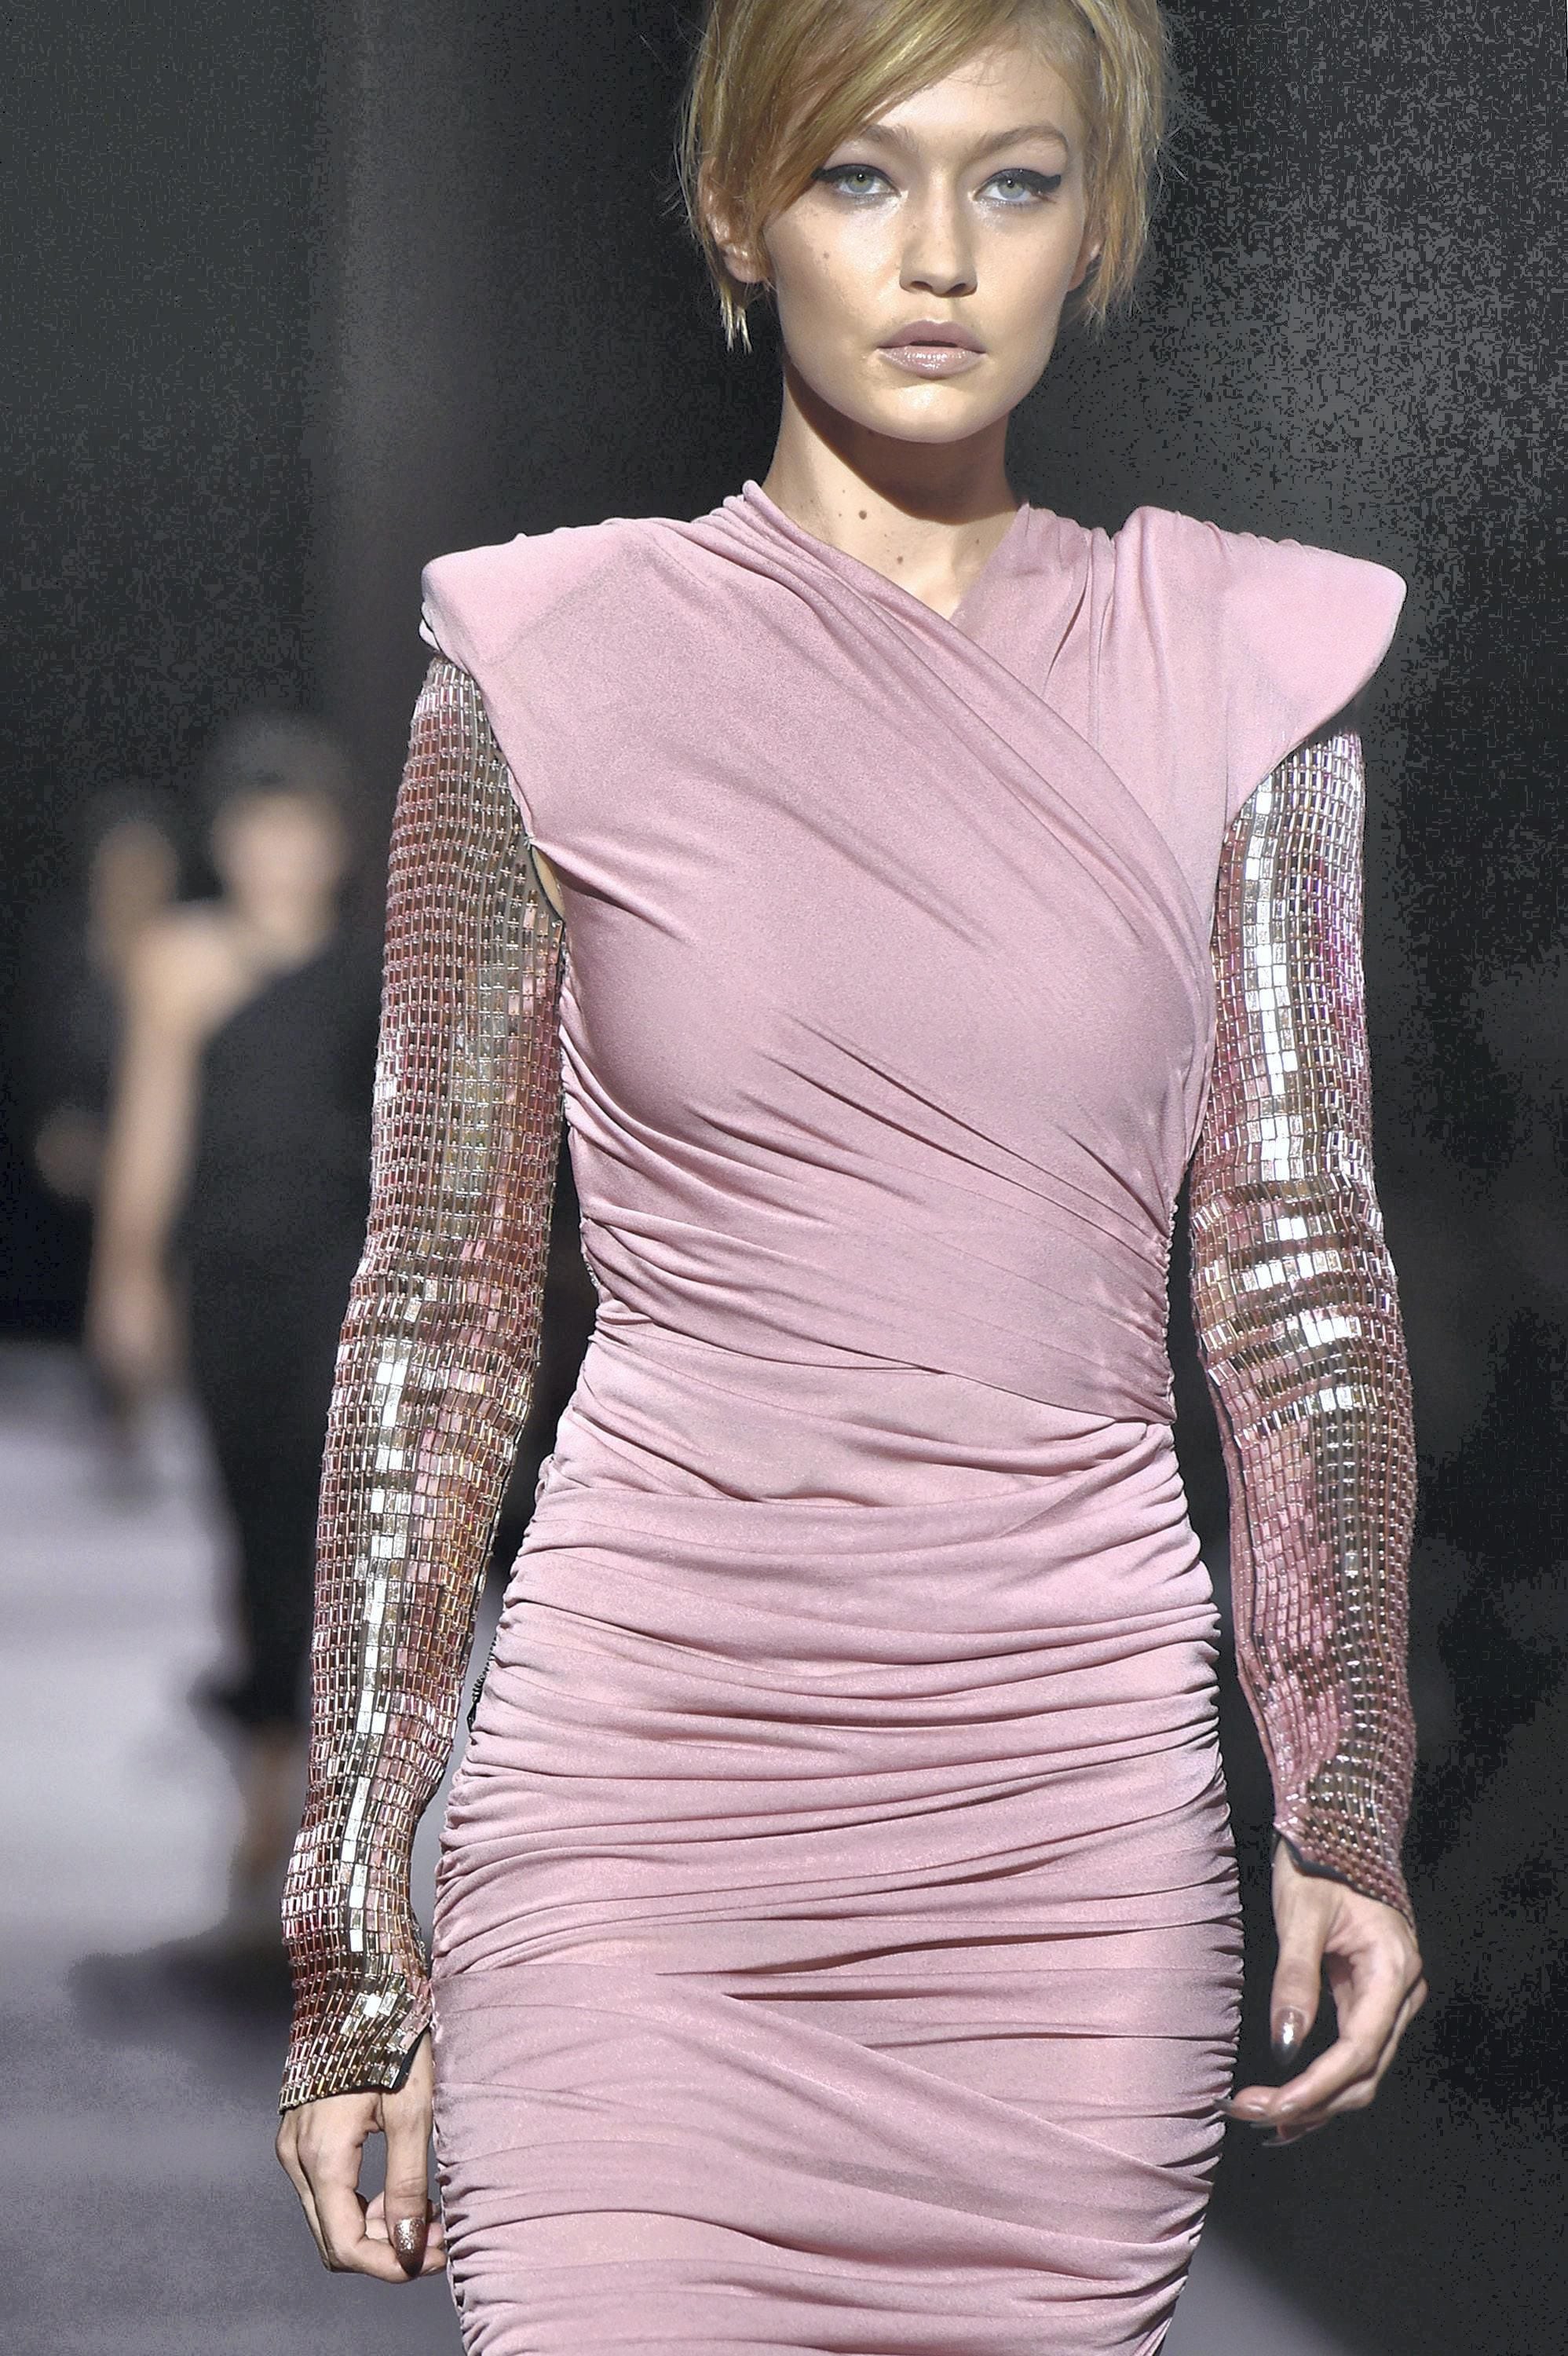 Gigi Hadid Walked the Runway in a See-Through Metallic Fishnet Dress